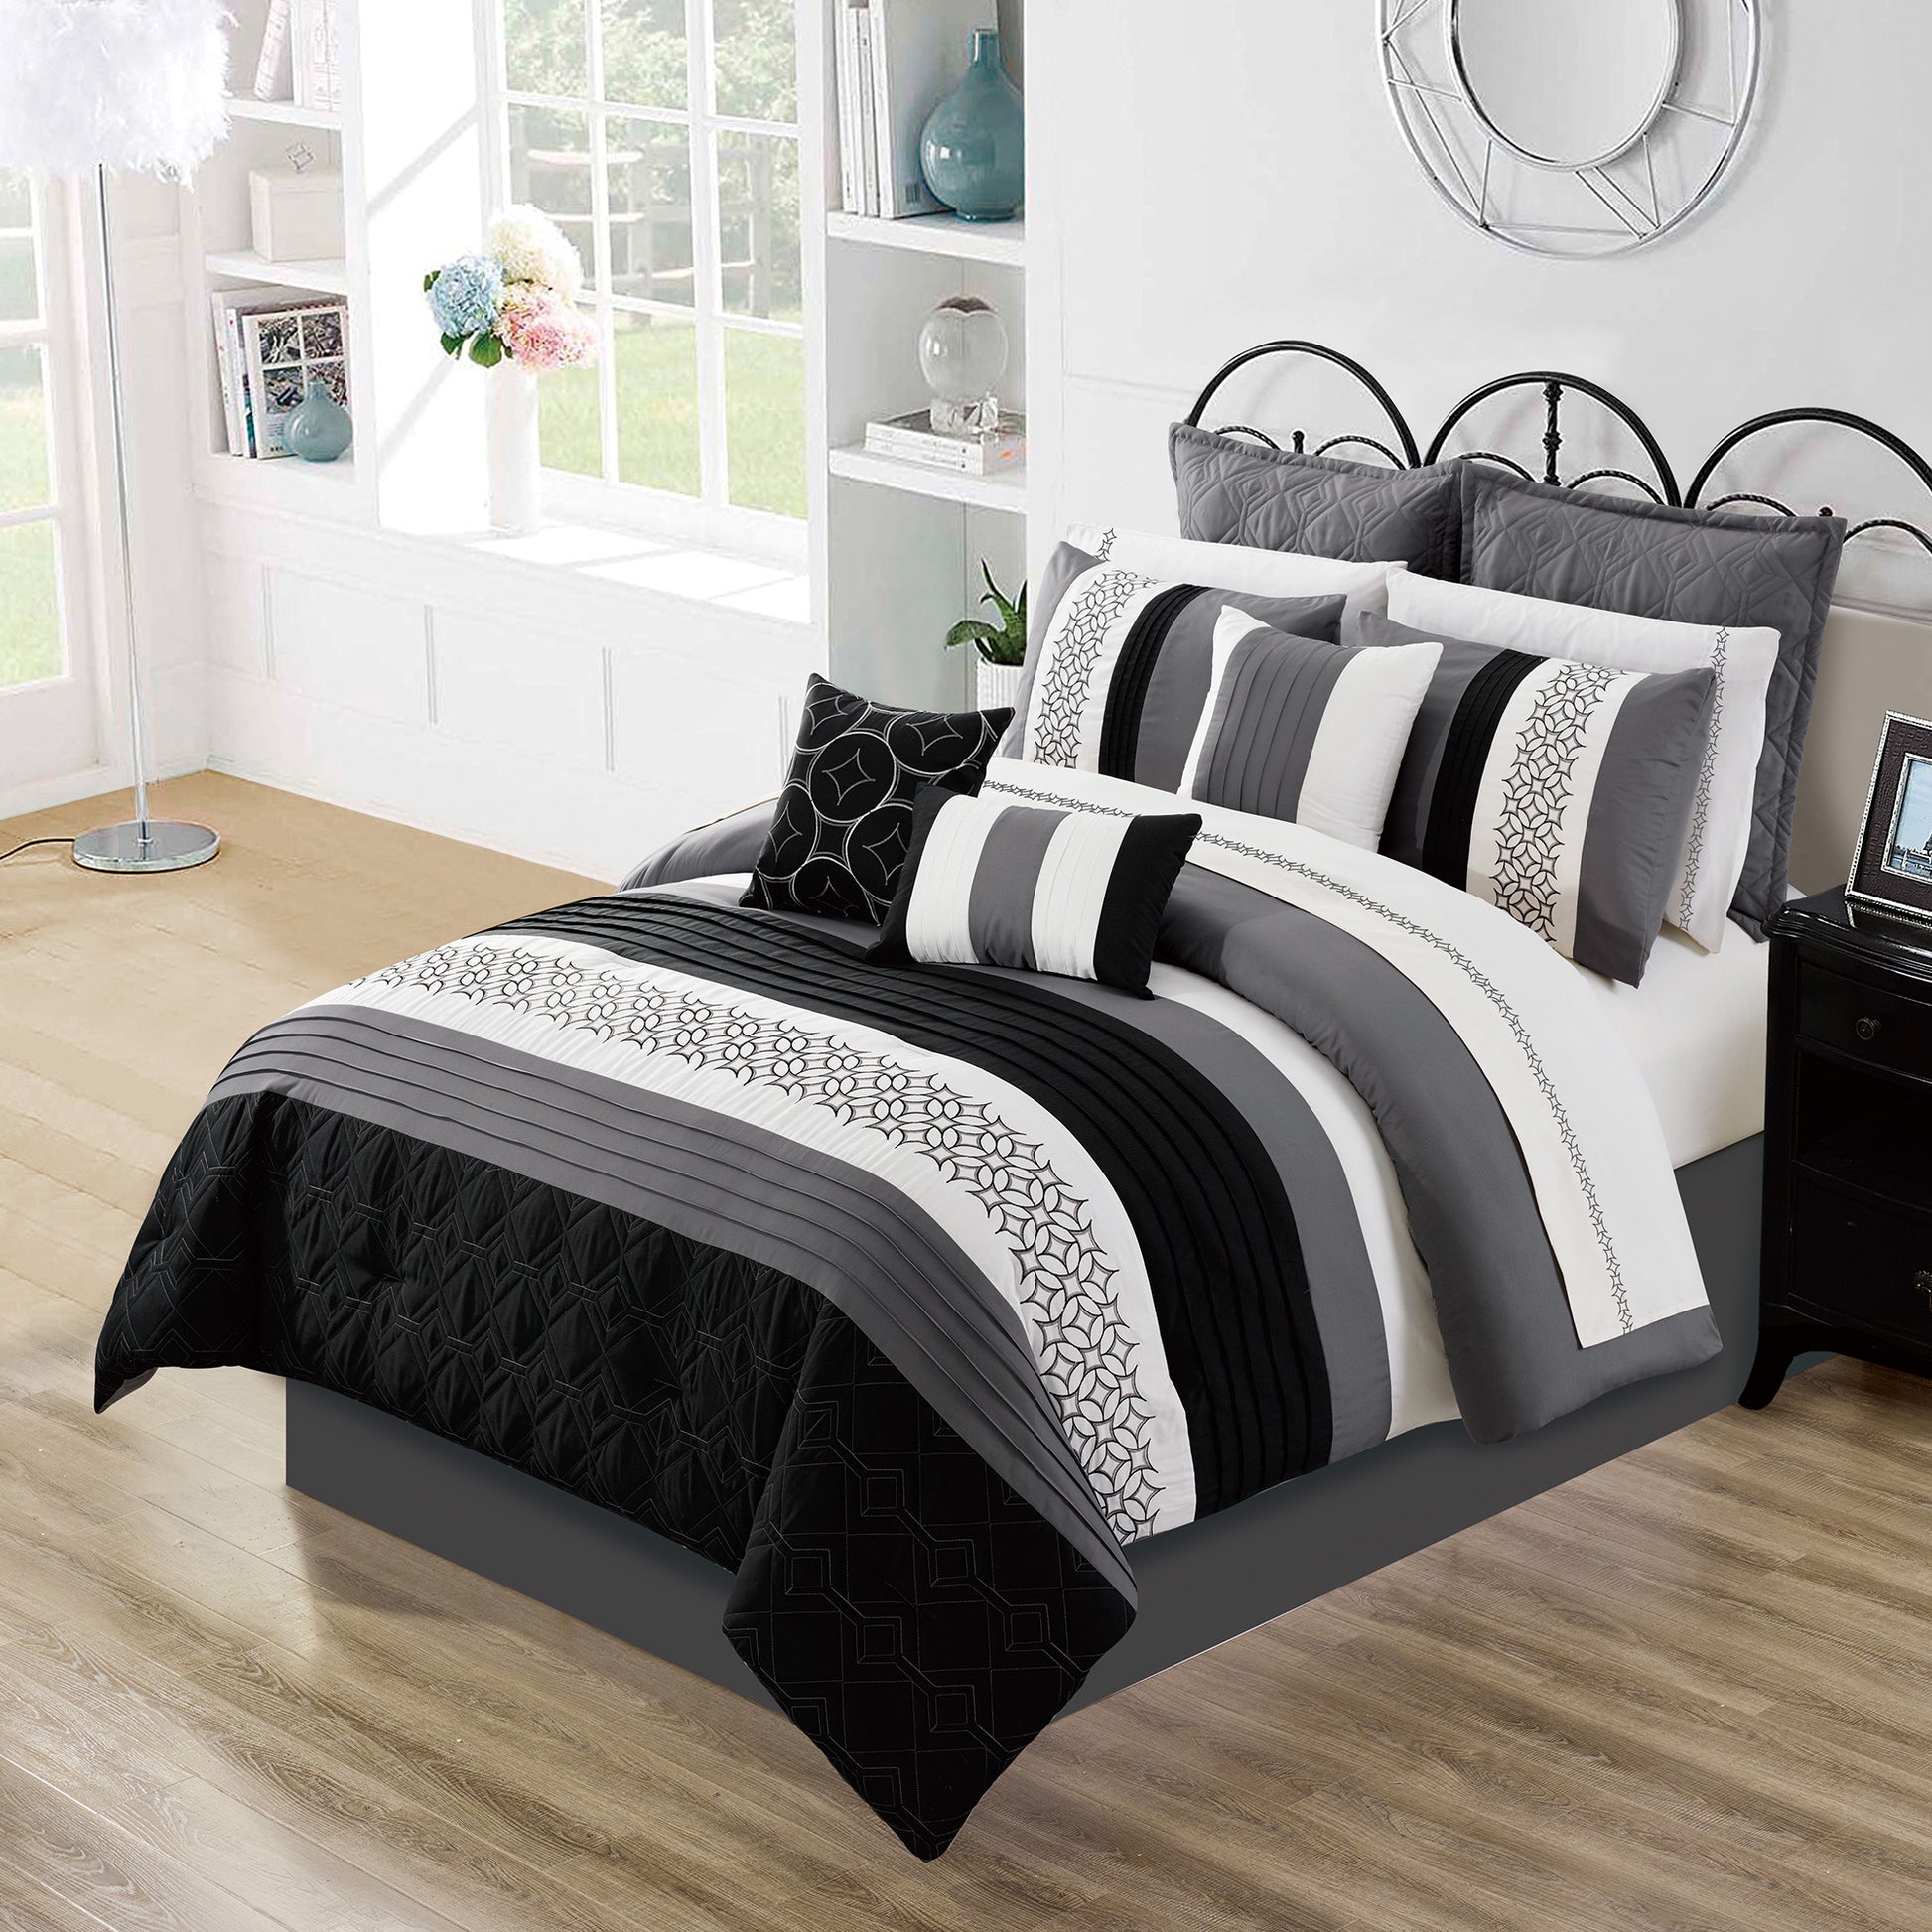 Woven Comforter Bedding Set 7Pcs Queen Maddox